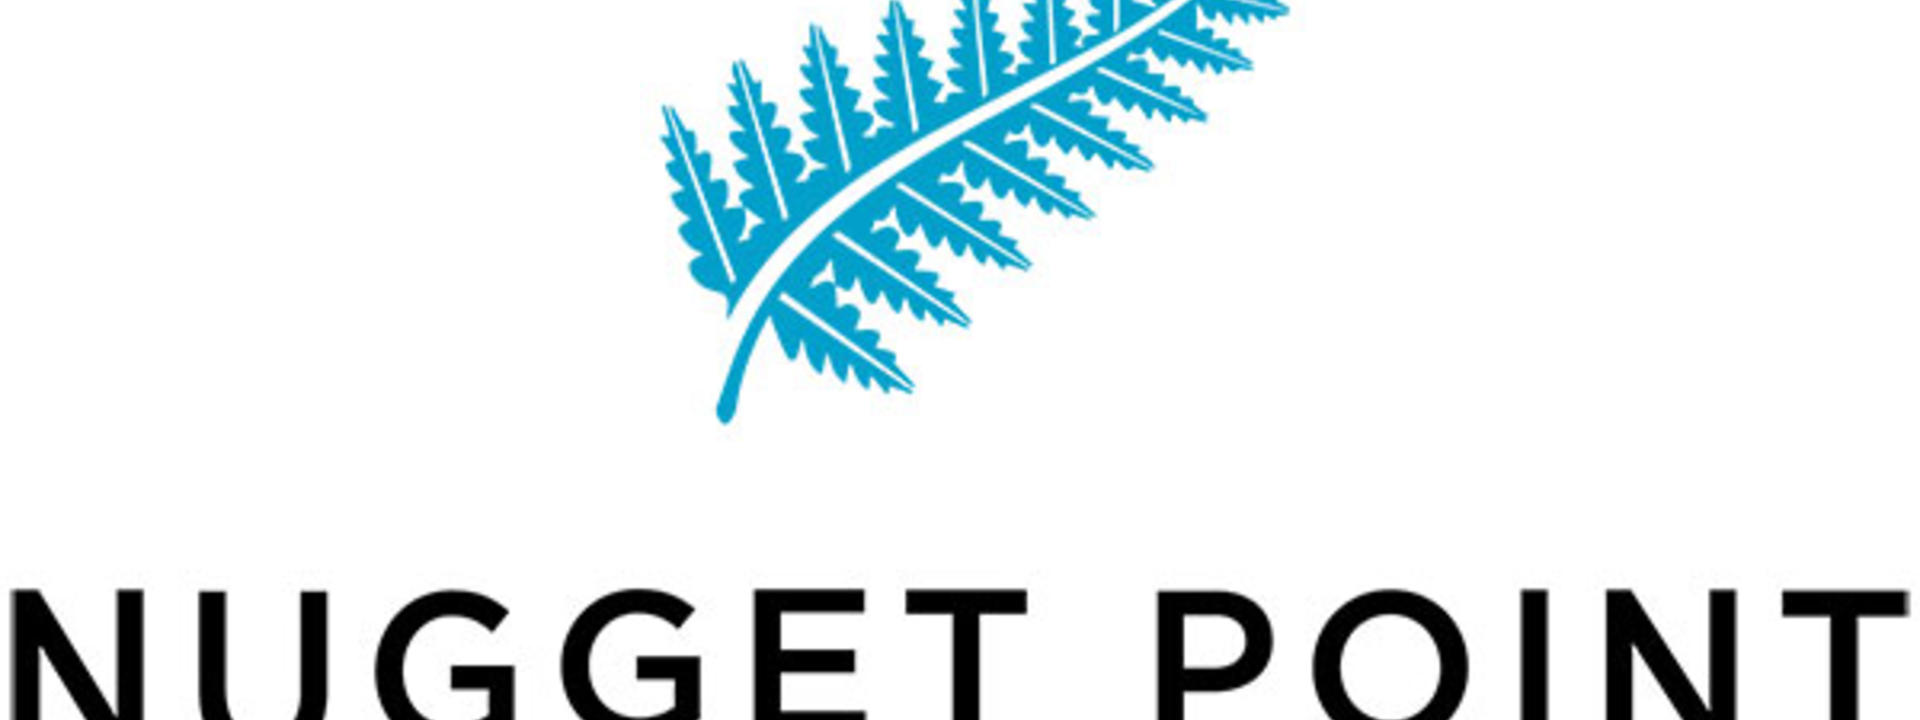 Nugget-Point-Logo-600px (002).jpg